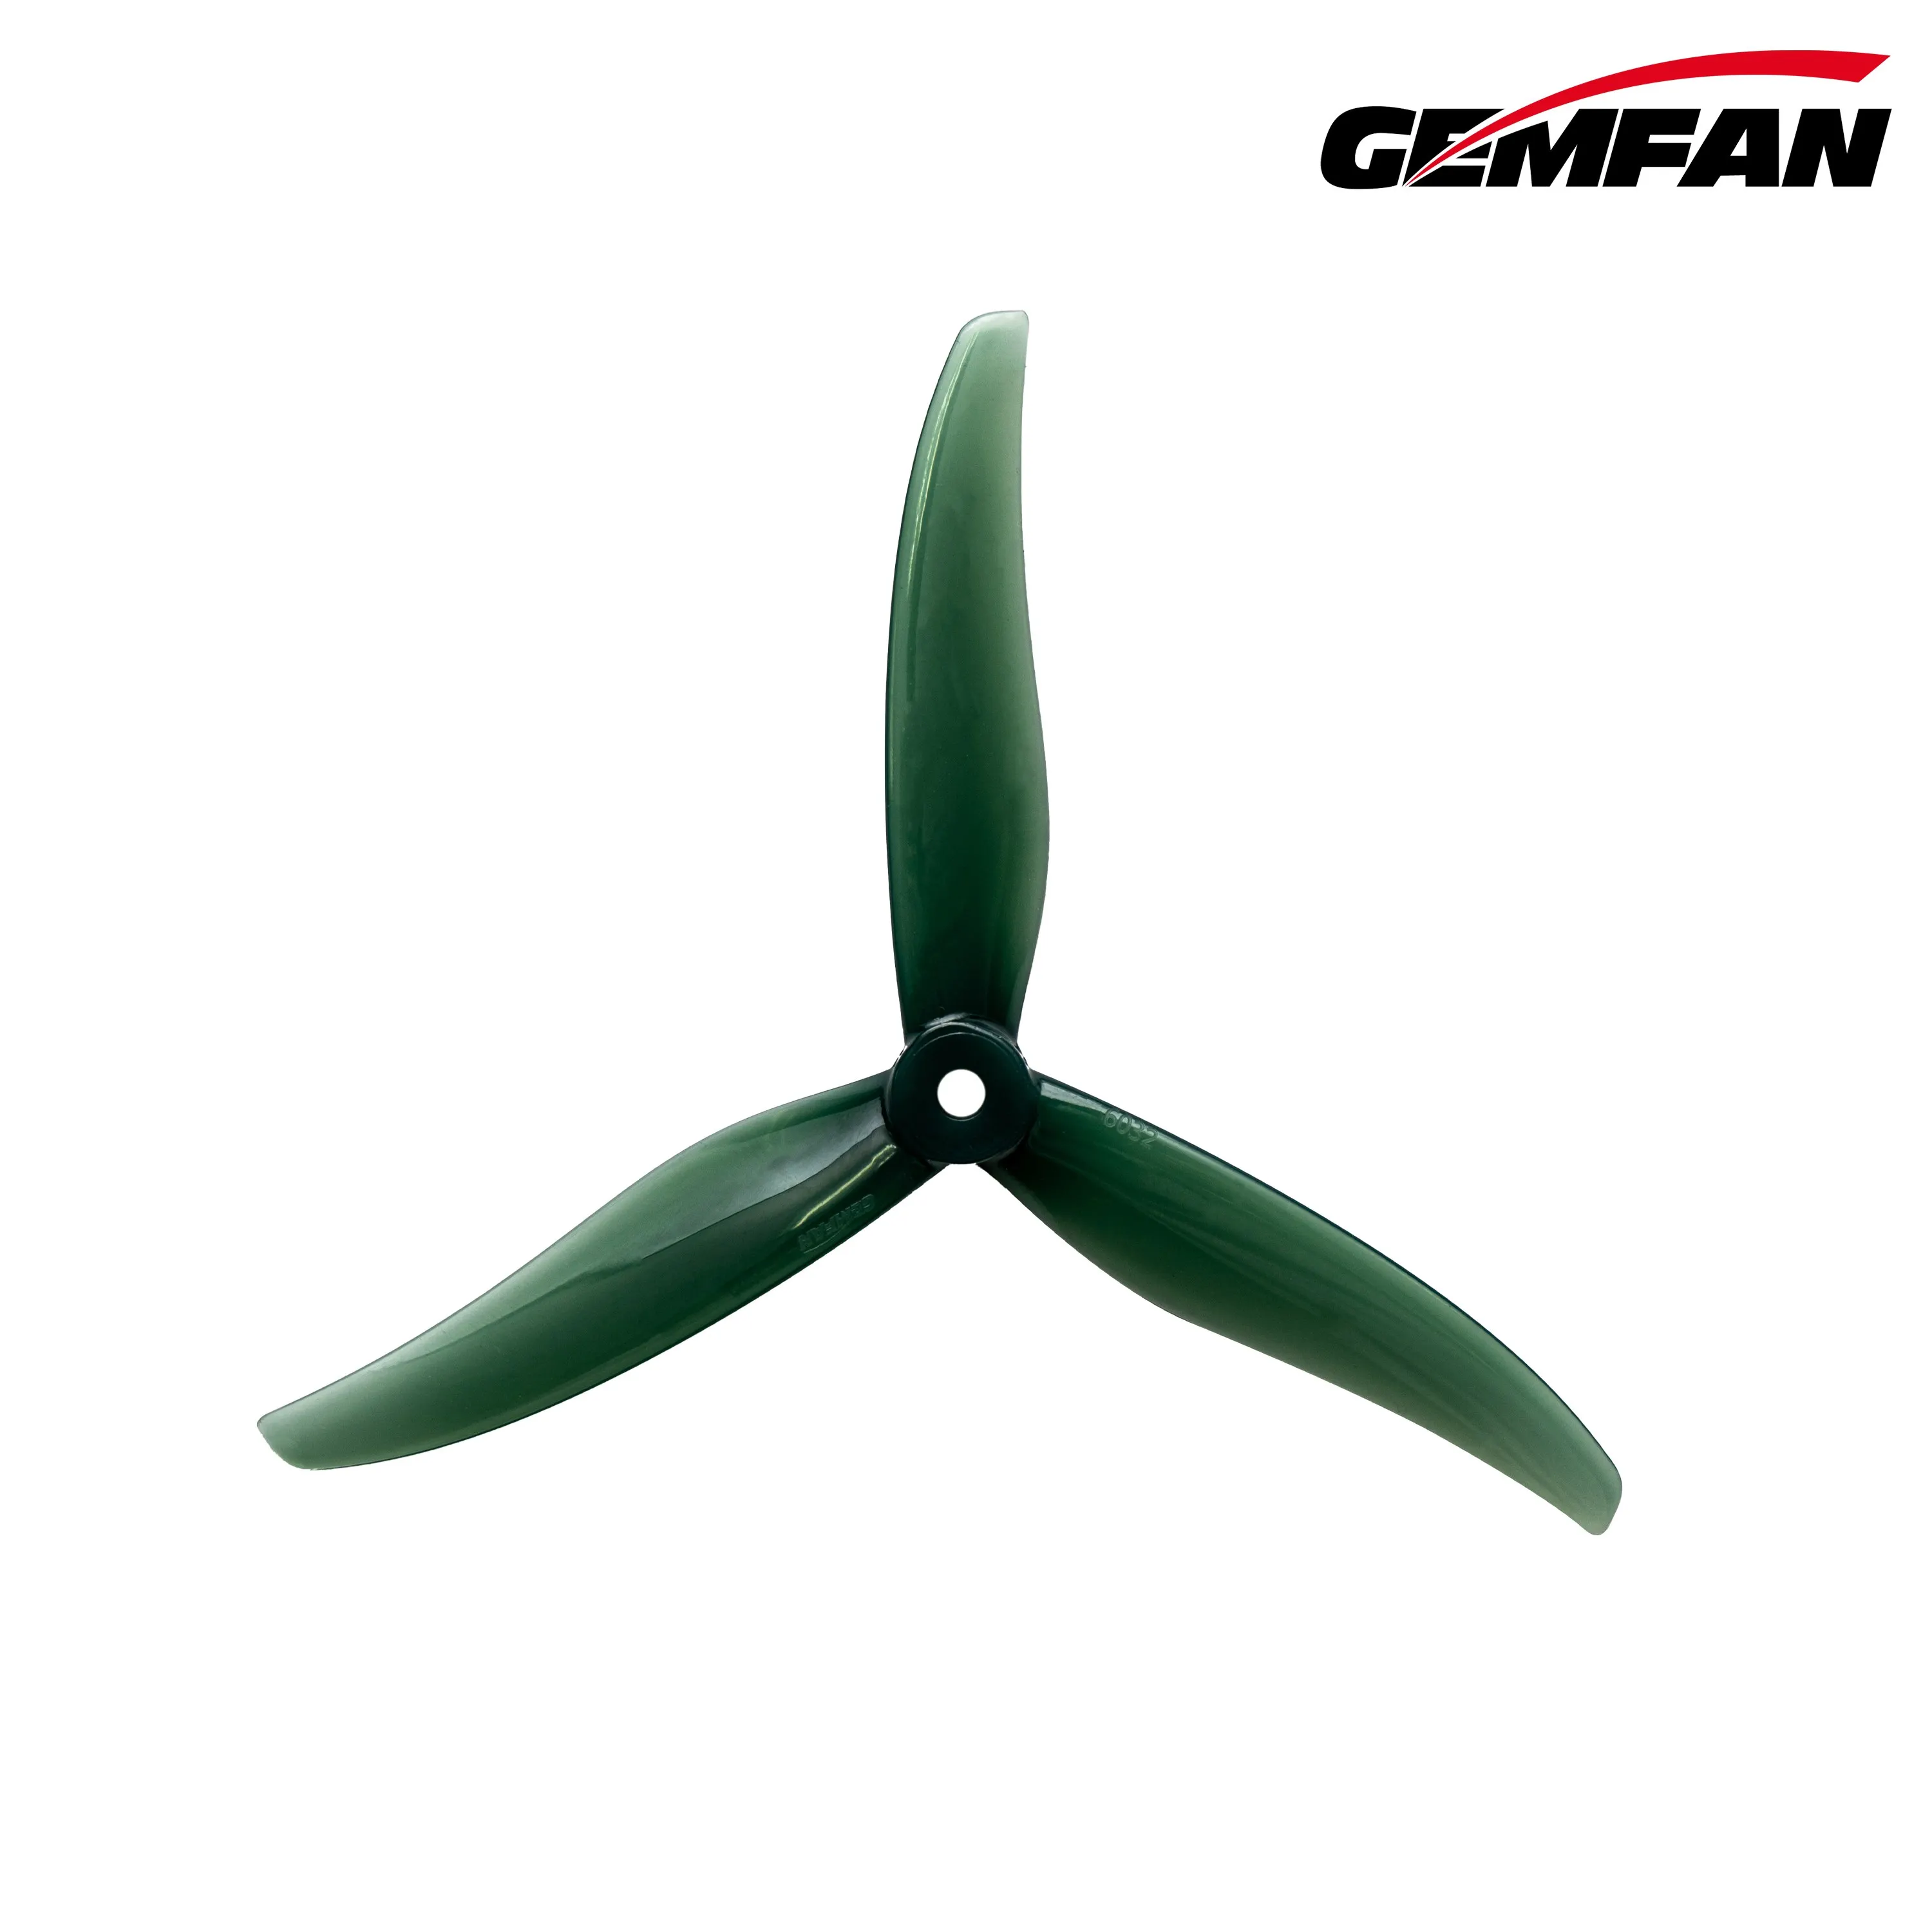 Gemfan Freestyle 6032 6x3.2x3 3-Blade Pine Green Propeller